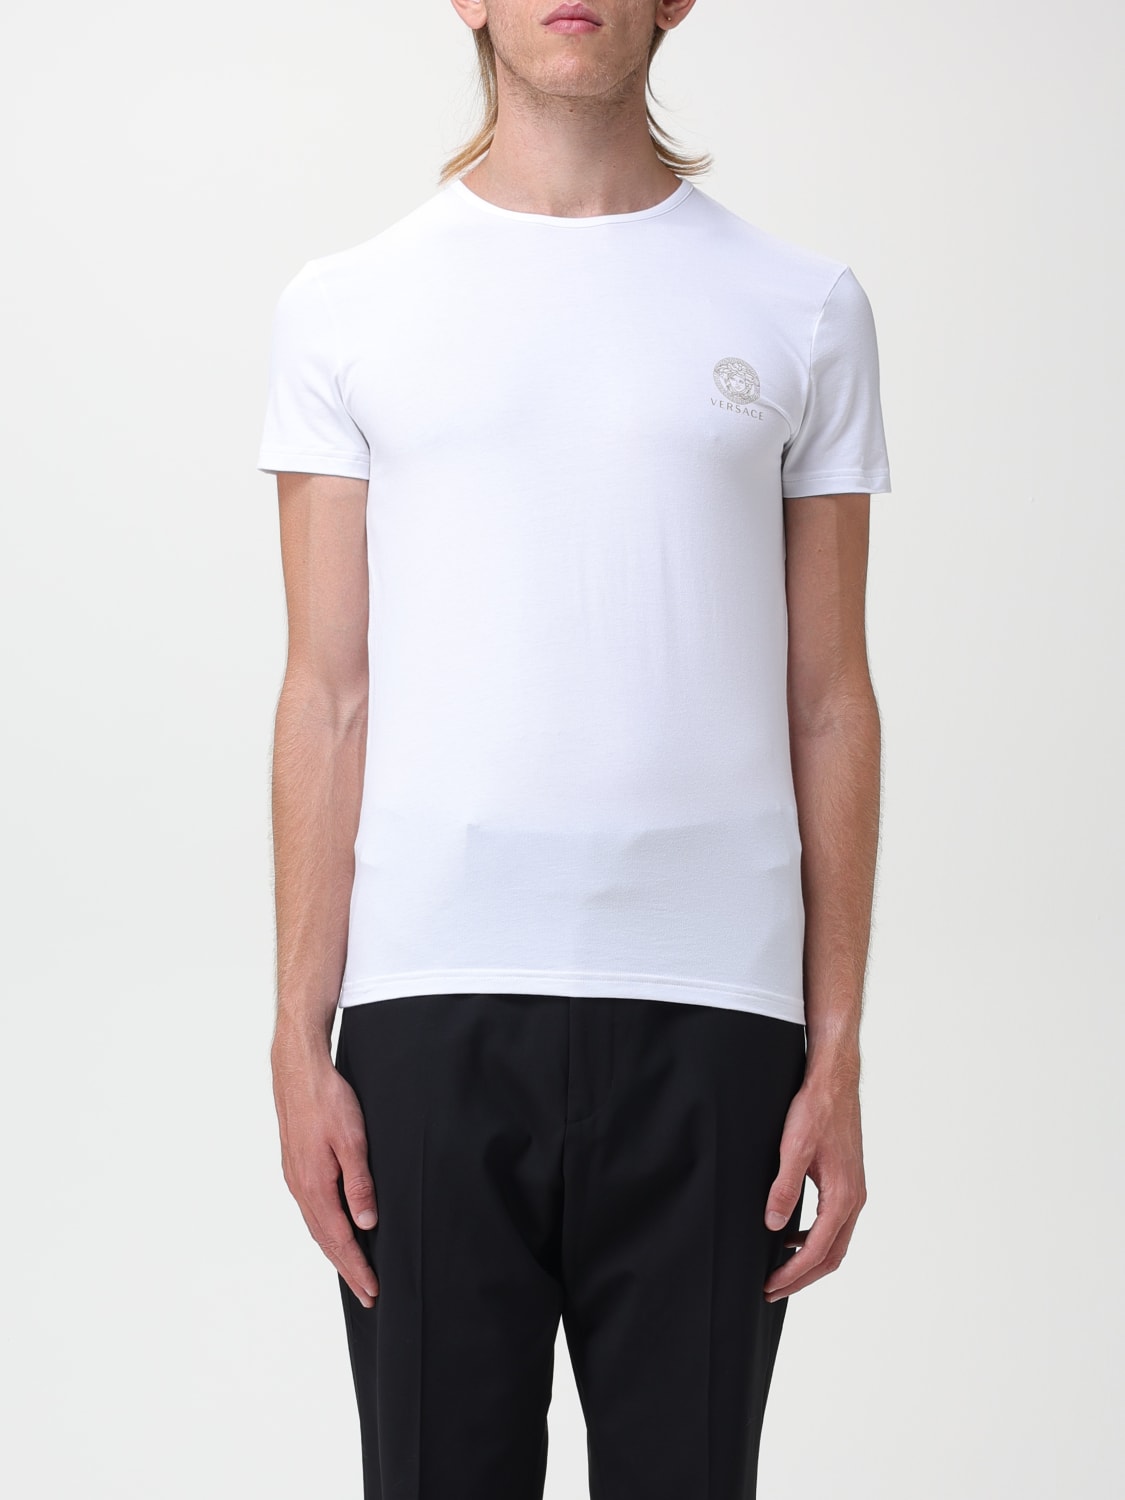 Versace set of 2 basic t-shirts